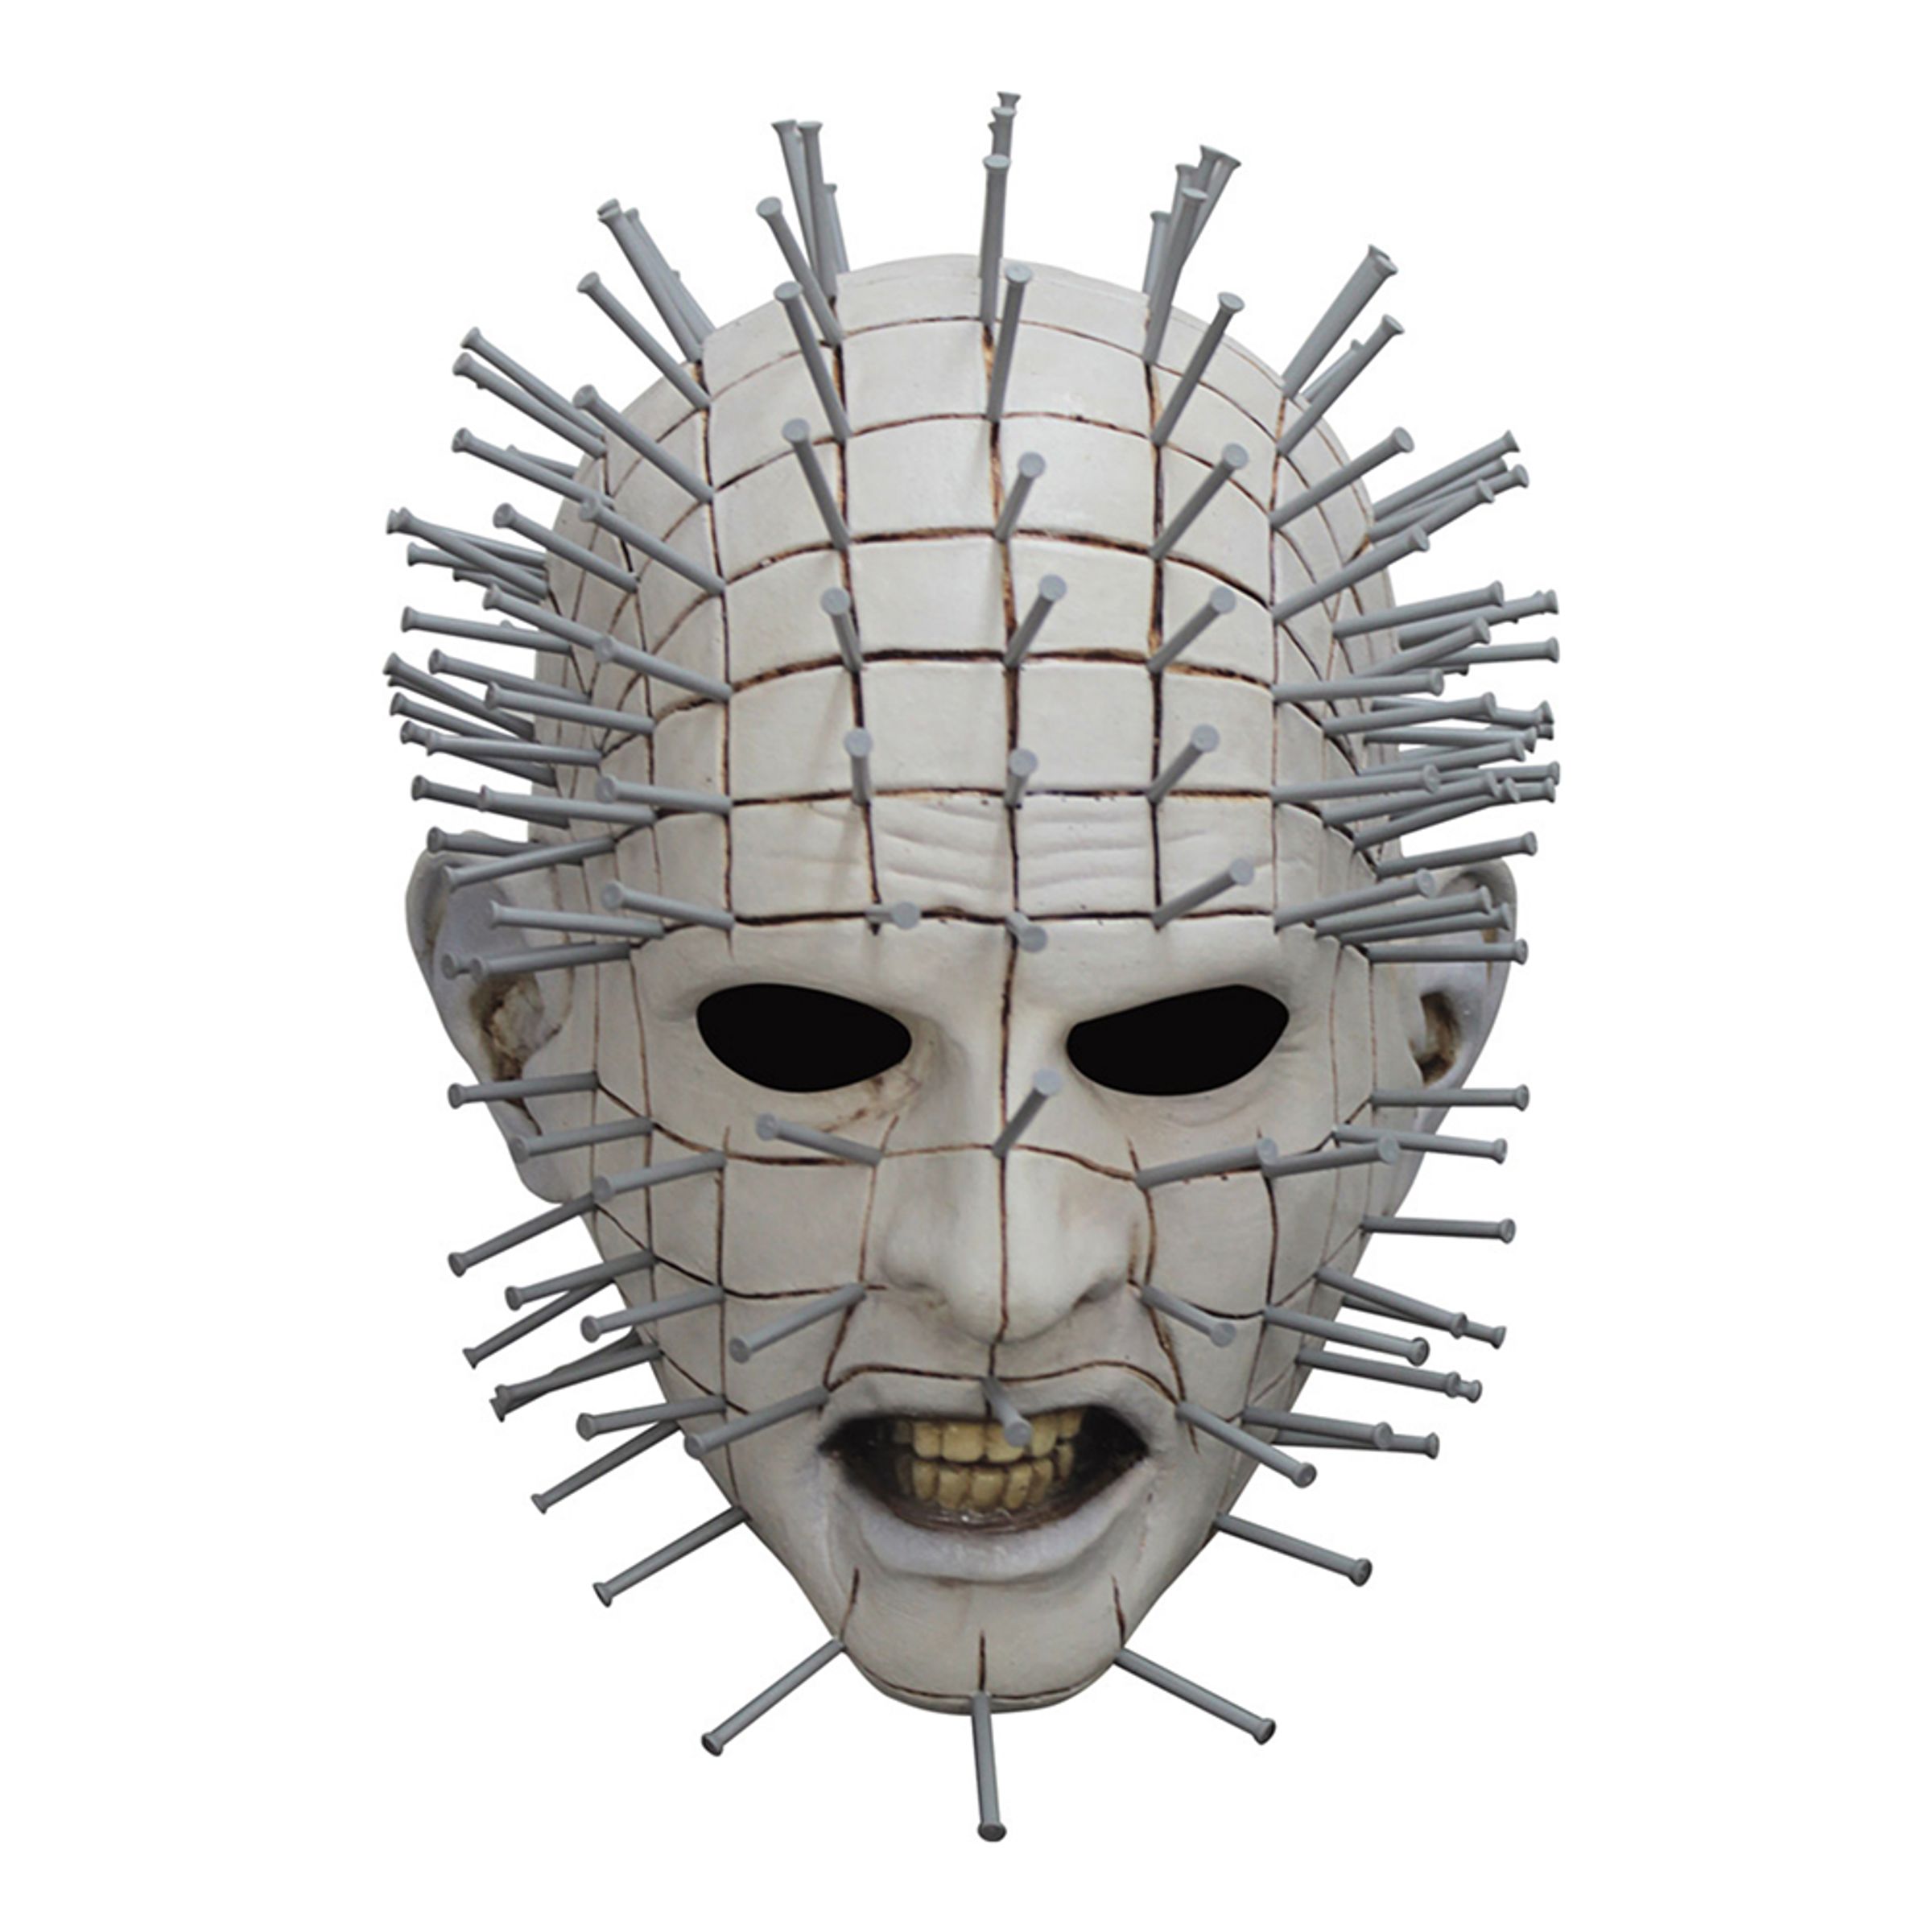 Pinhead Mask - One size